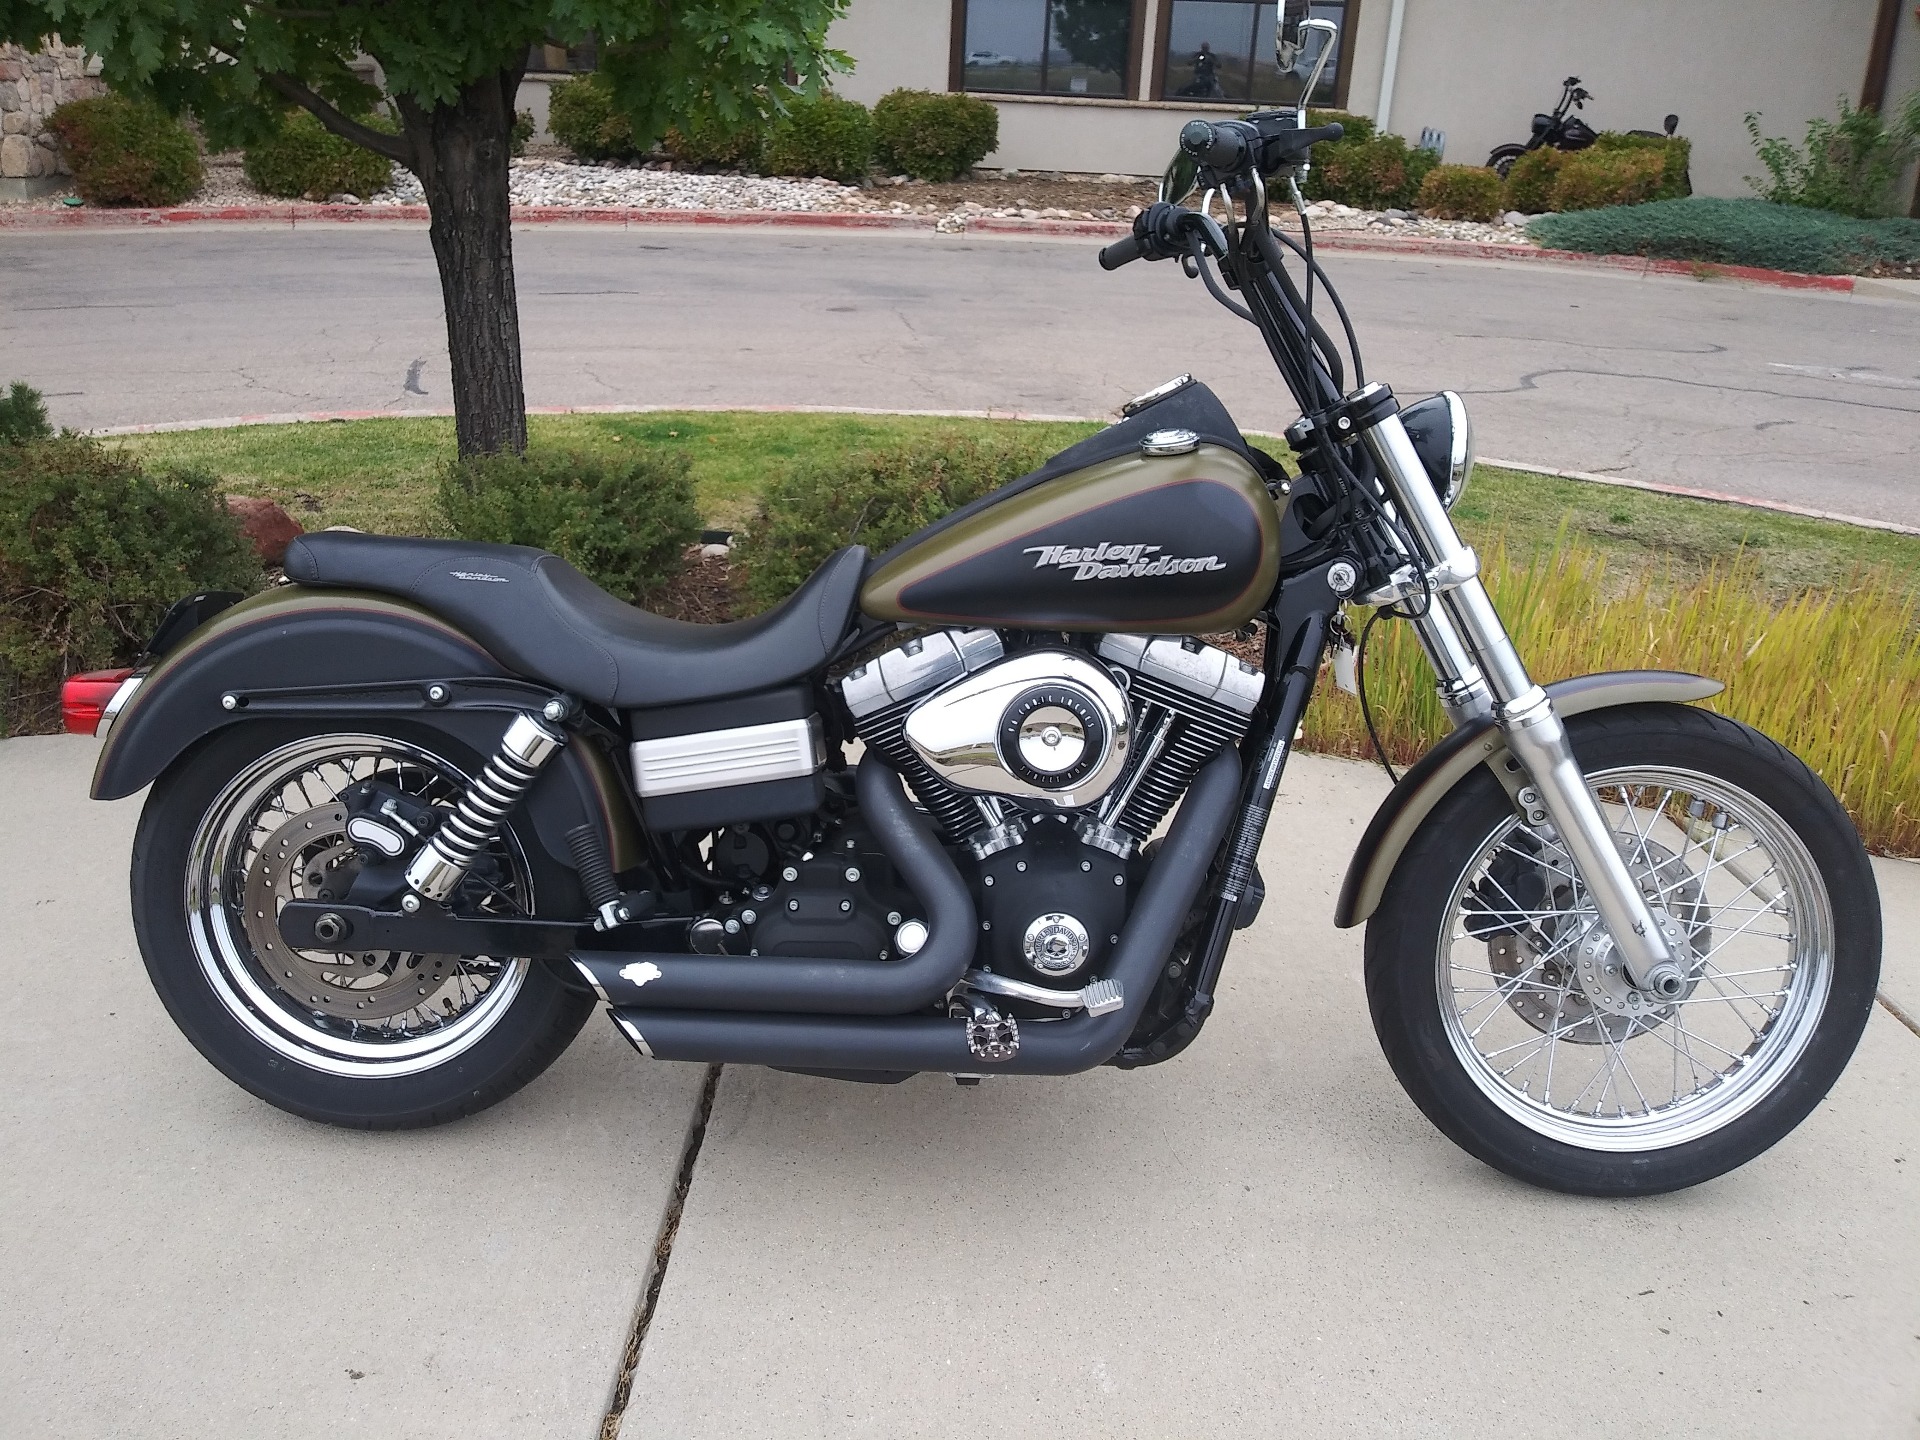 2008 Harley-Davidson Dyna® Street Bob® in Loveland, Colorado - Photo 1